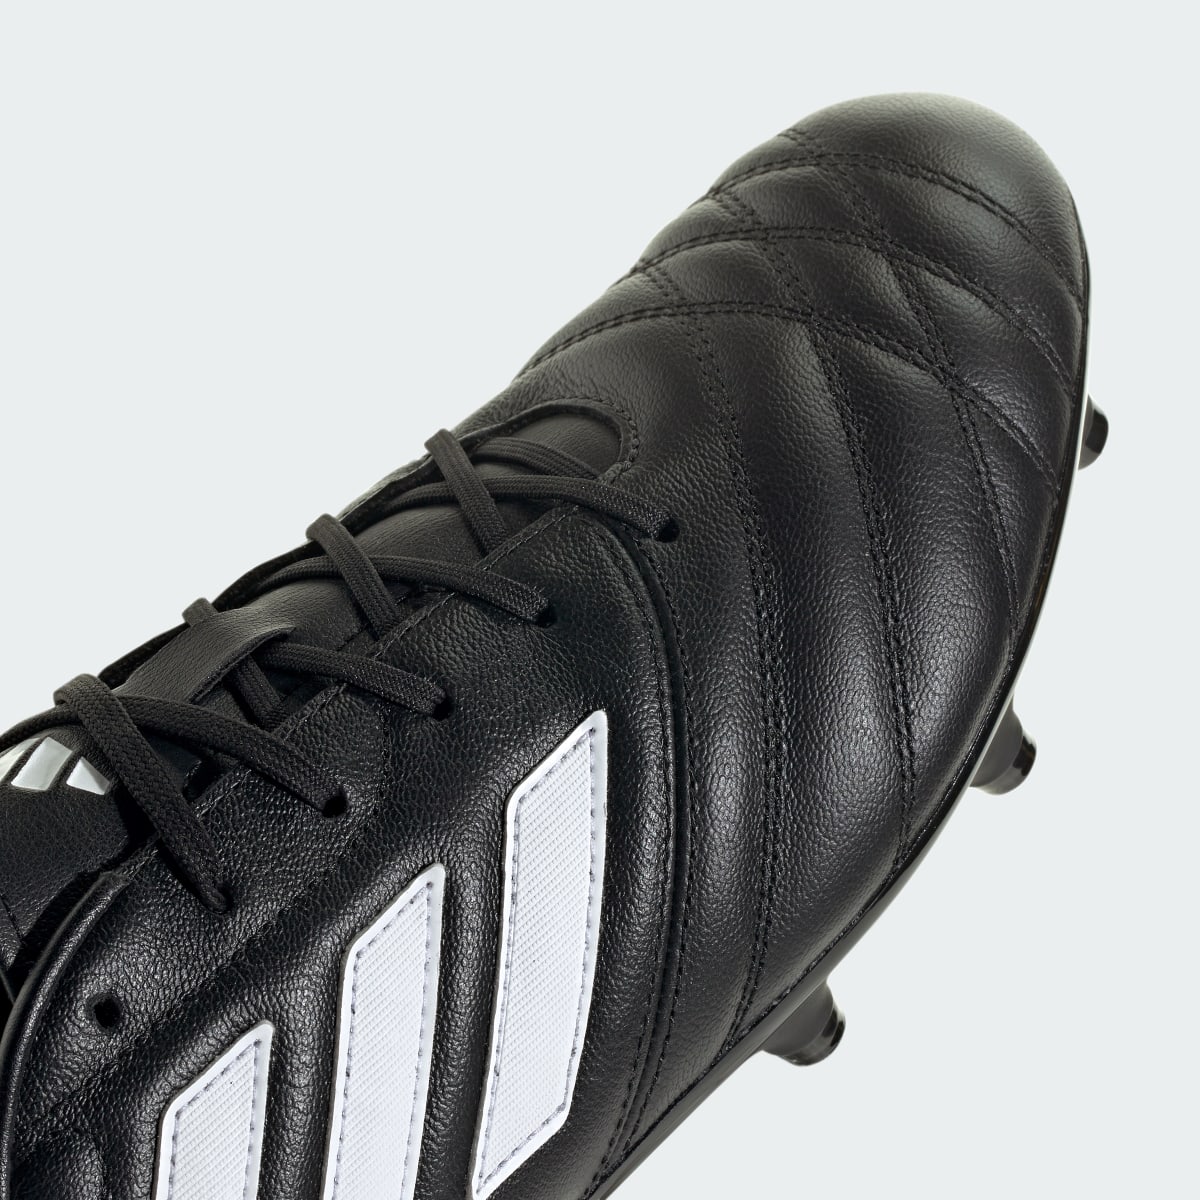 Adidas Copa Gloro Firm Ground Boots. 9